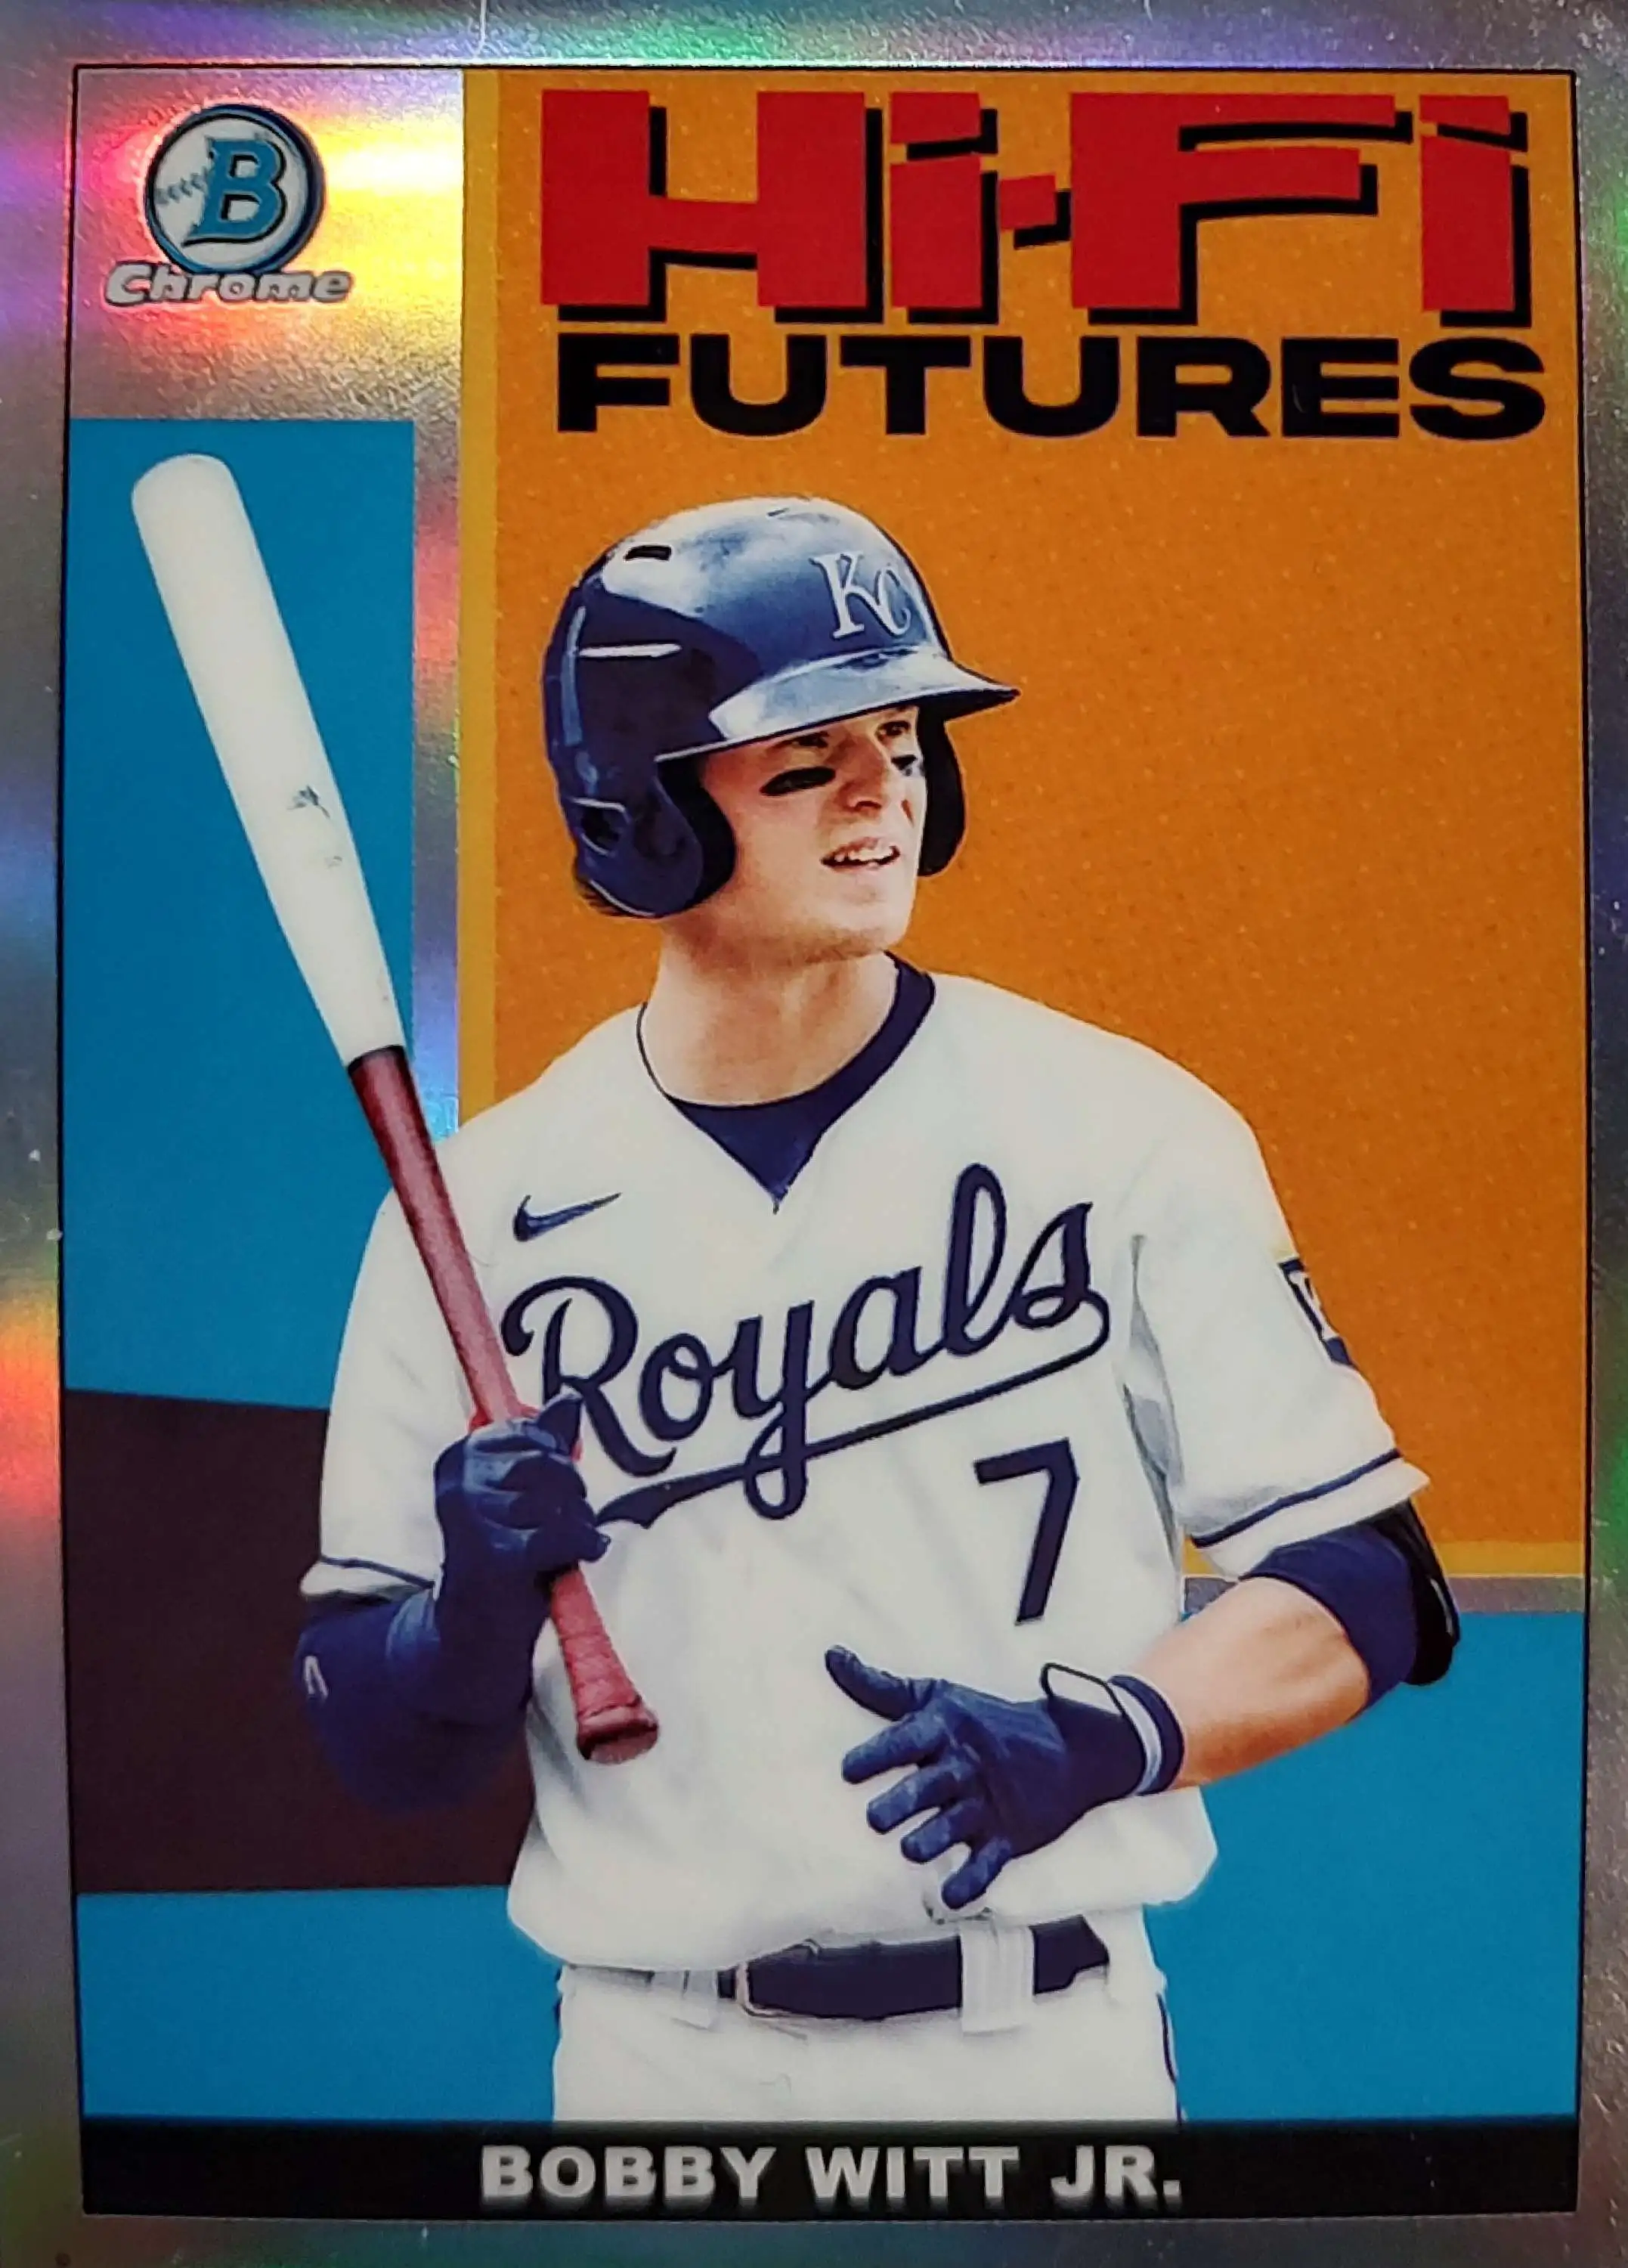 MLB Topps 2022 Bowman Chrome Baseball Bobby Witt Jr. Trading Card HIFI-5  [Hi-Fi Futures]